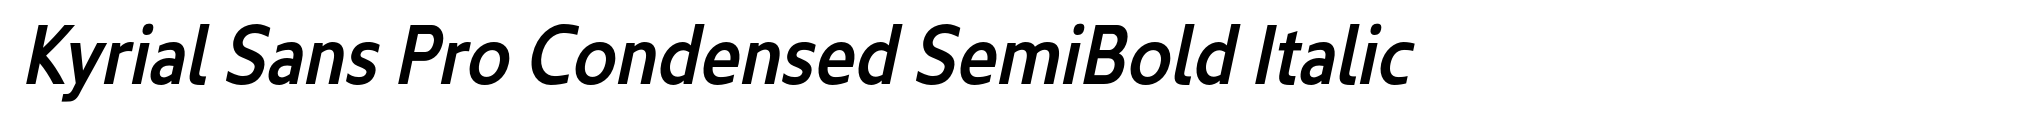 Kyrial Sans Pro Condensed SemiBold Italic image